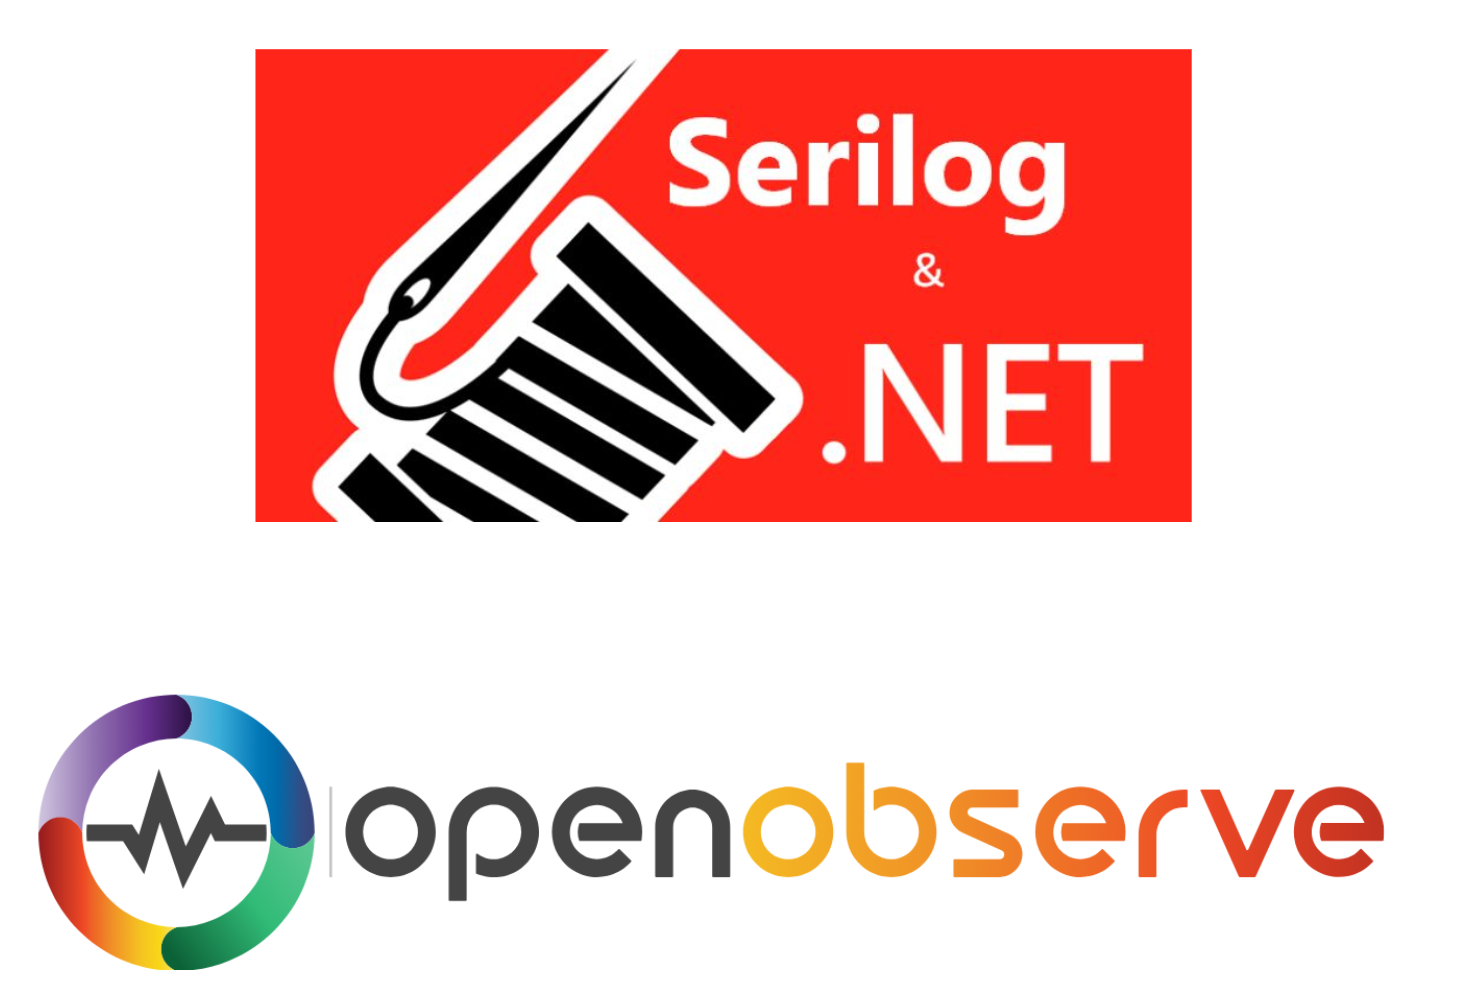 Serilog Sink for OpenObserve